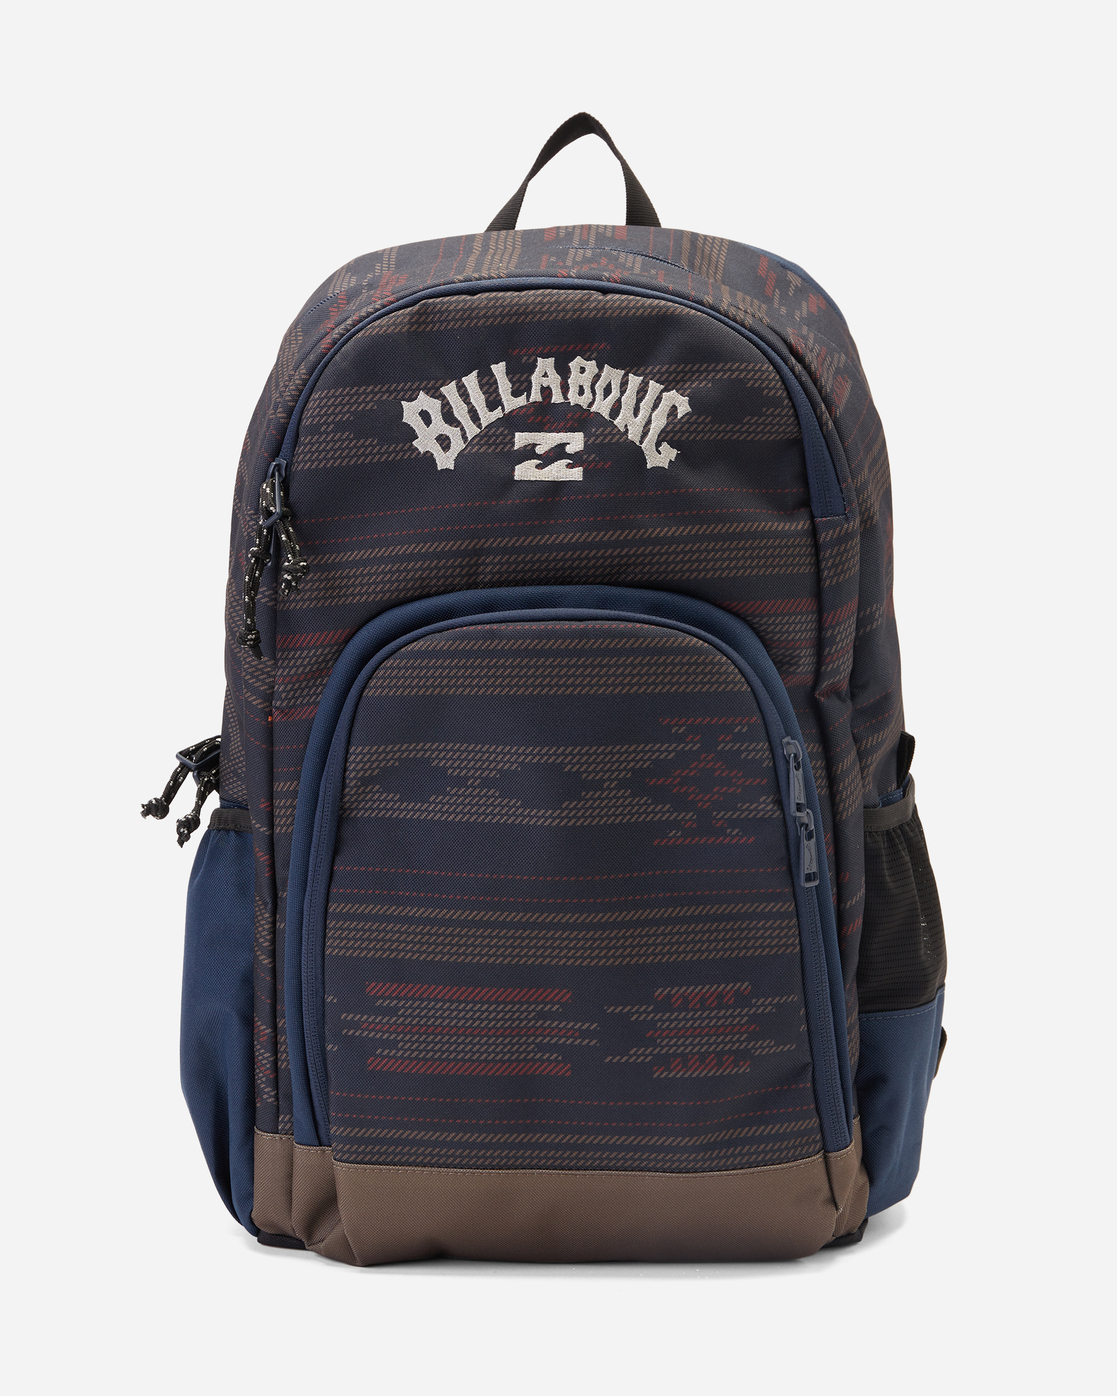 29L Billabong Men's Command Backpack (Navy) $28 & More + Free Shipping